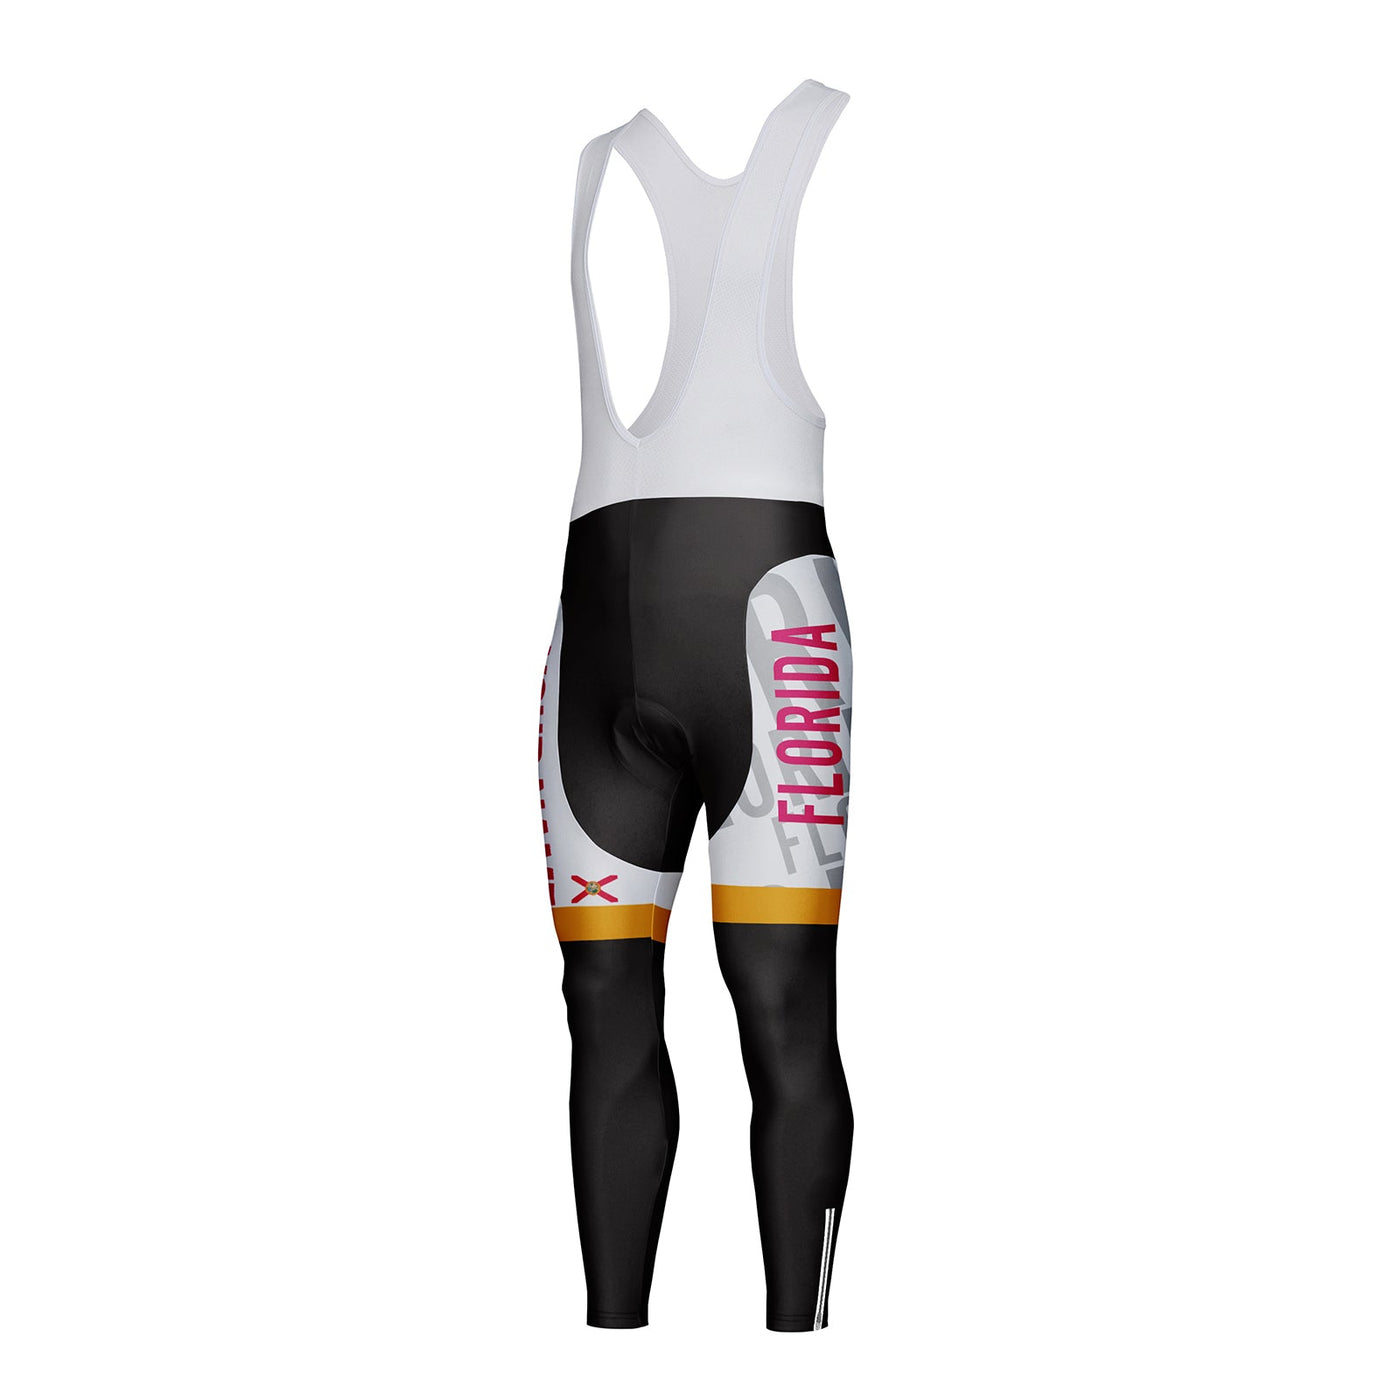 Customized Florida Unisex Thermal Fleece Cycling Bib Tights Long Pants